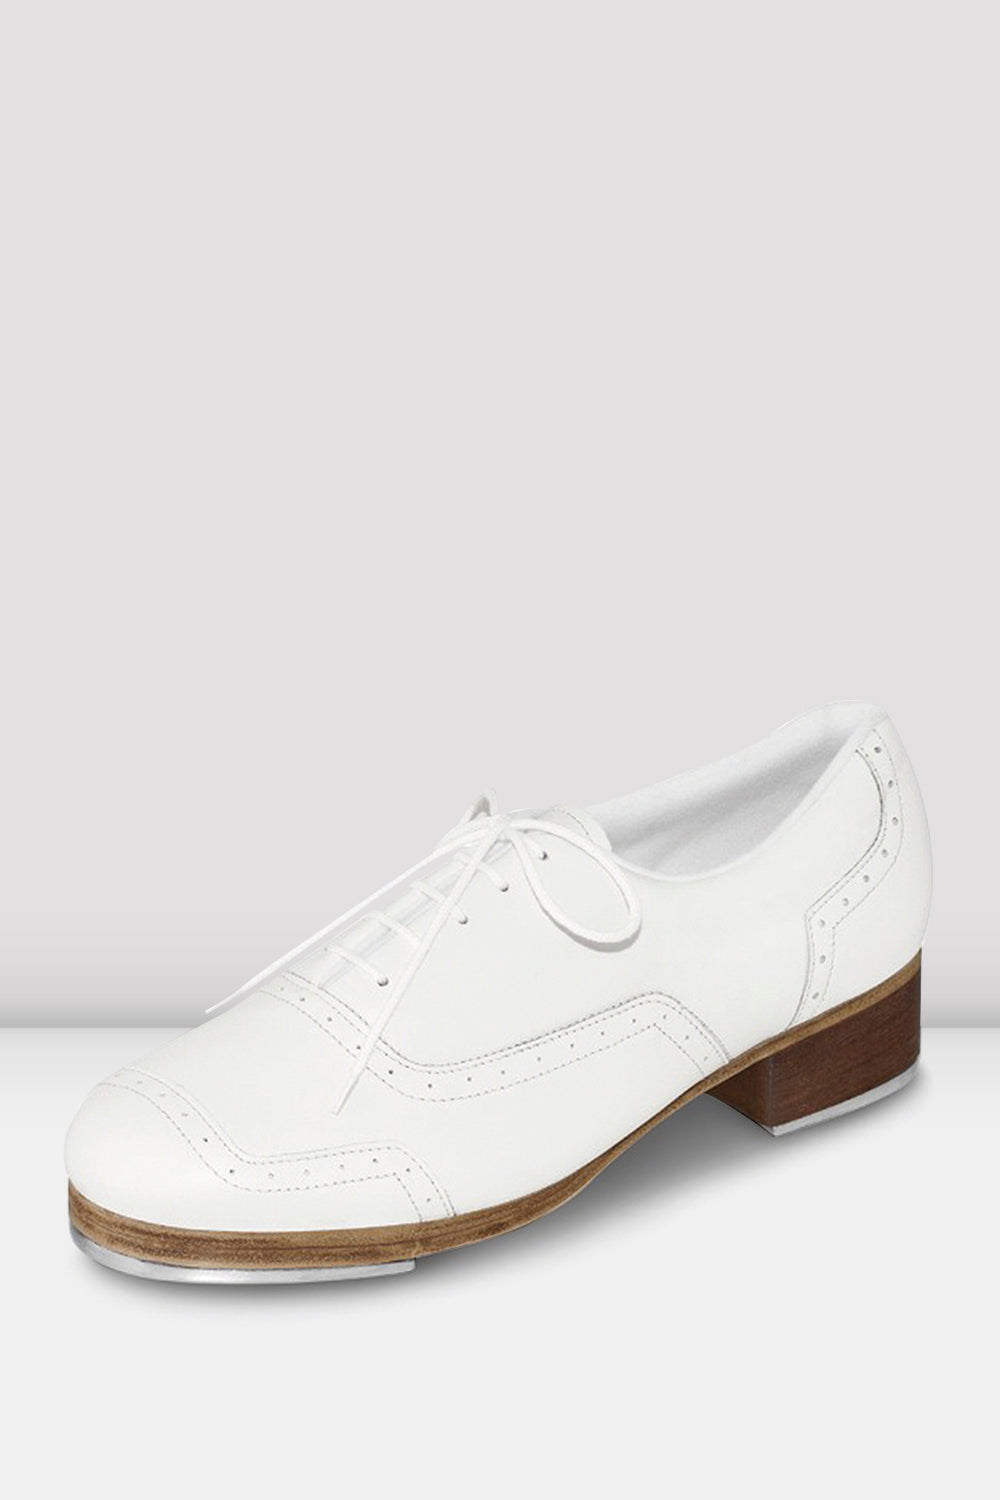 BLOCH Mens Jason Samuels Smith Tap Shoes, White Leather